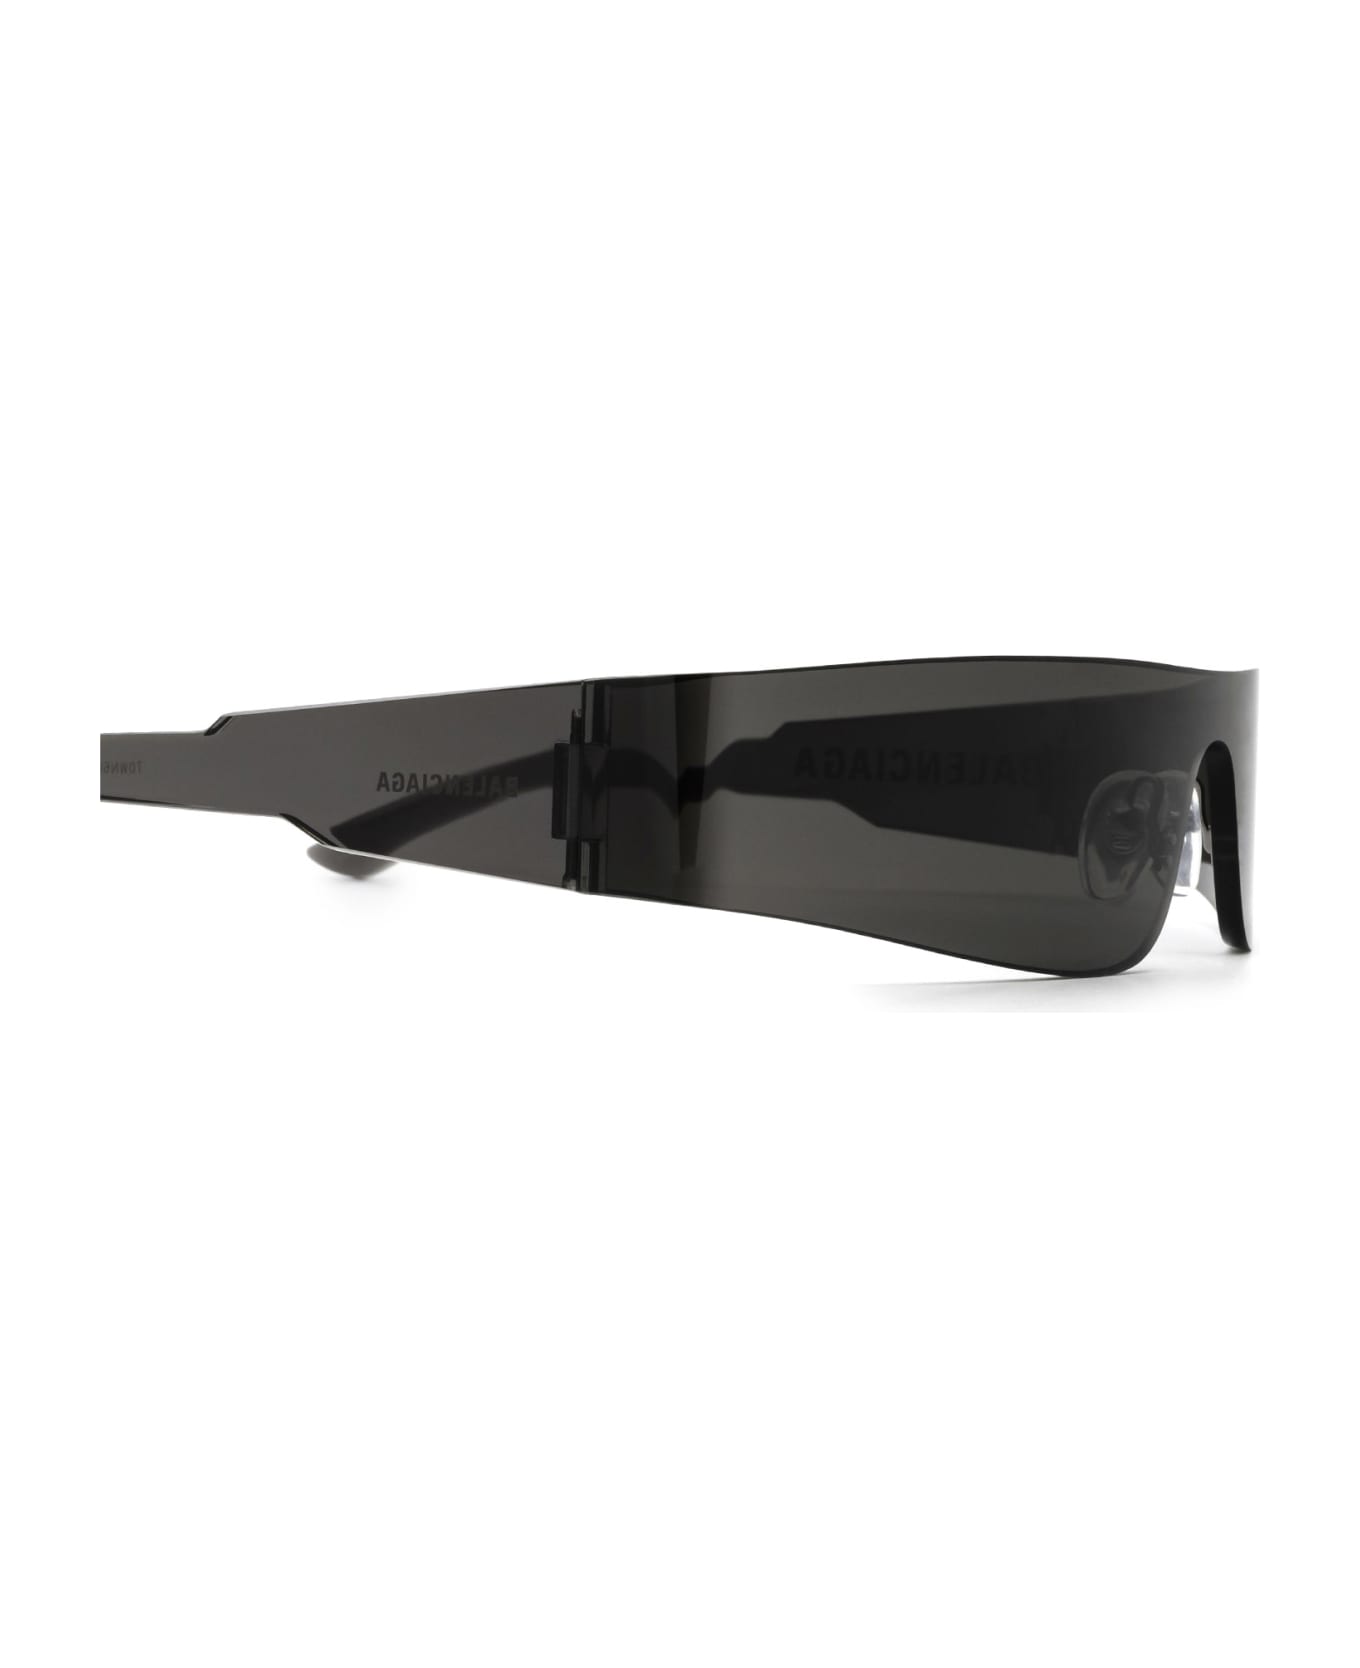 Balenciaga Eyewear Bb0041s Sunglasses - Black サングラス